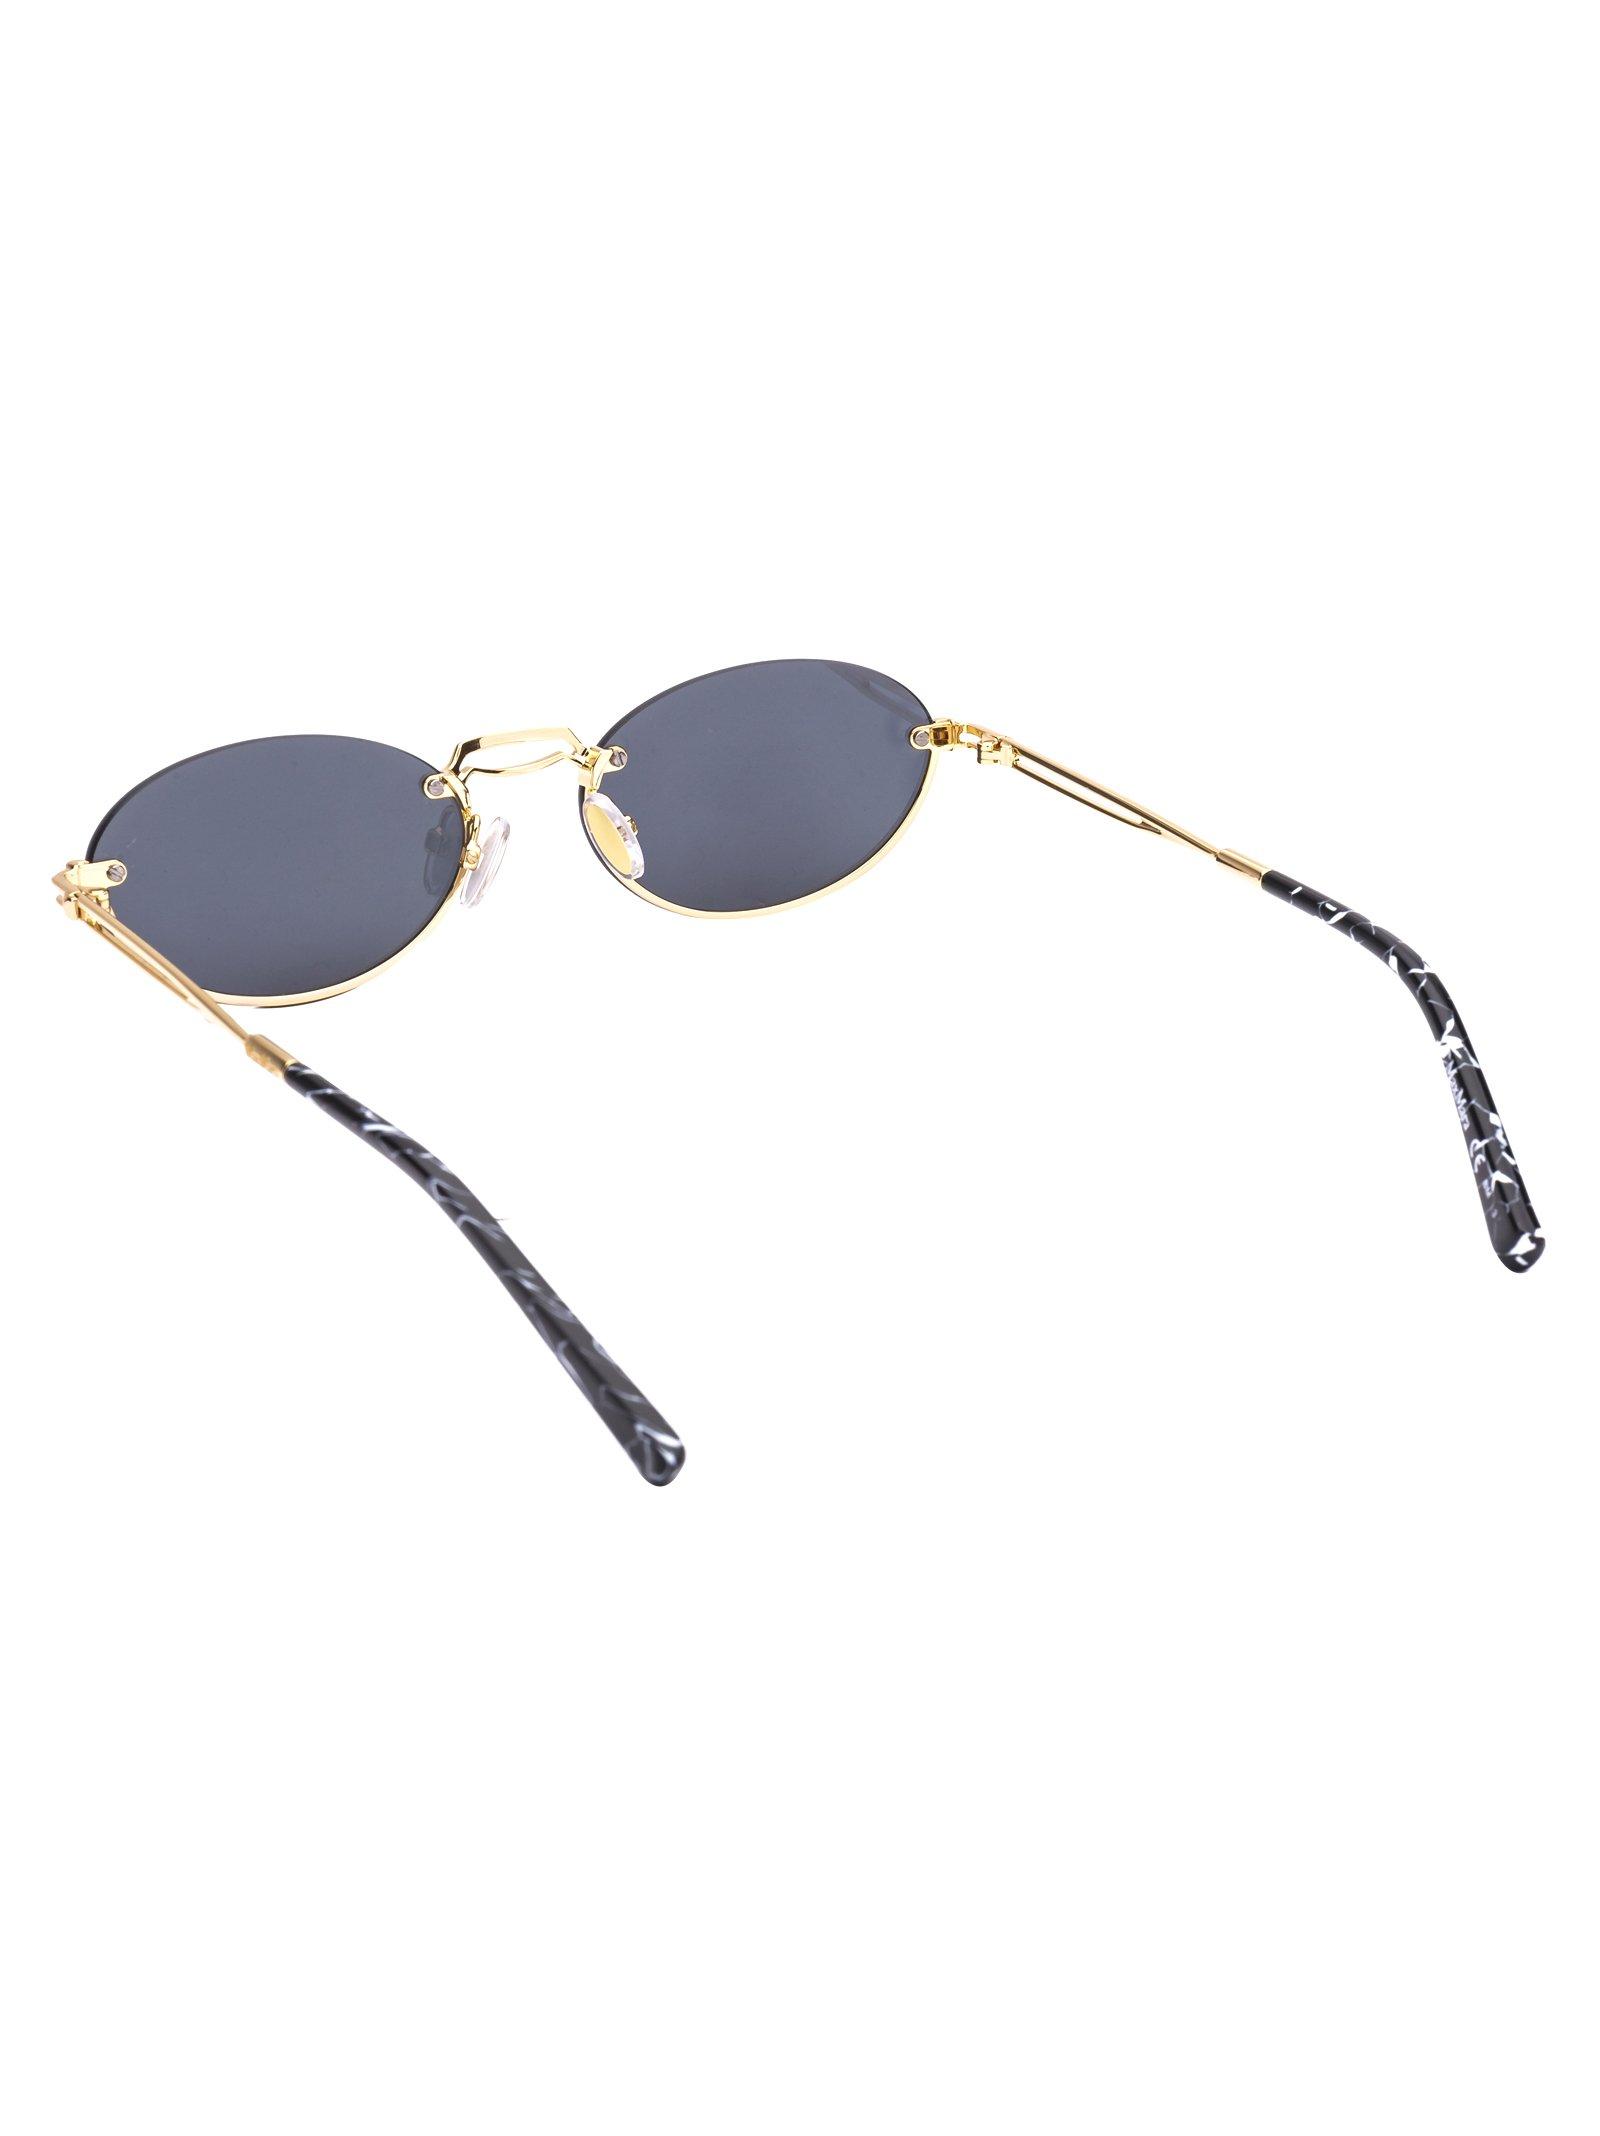 Max Mara Bridge Ii Sunglasses in Gold (Blue) - Lyst